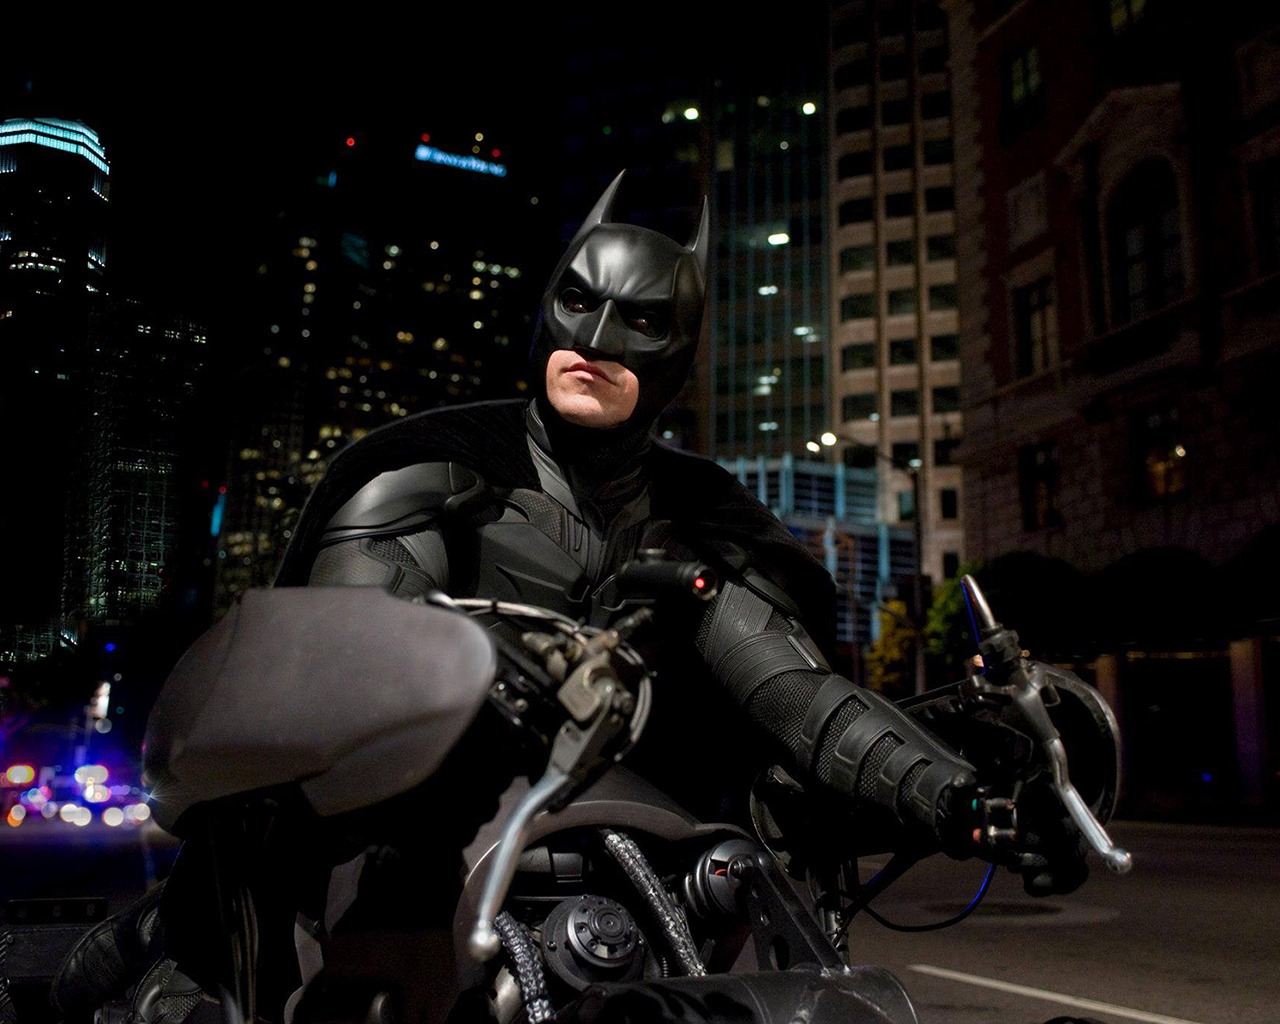 Batman on Bike for 1280 x 1024 resolution